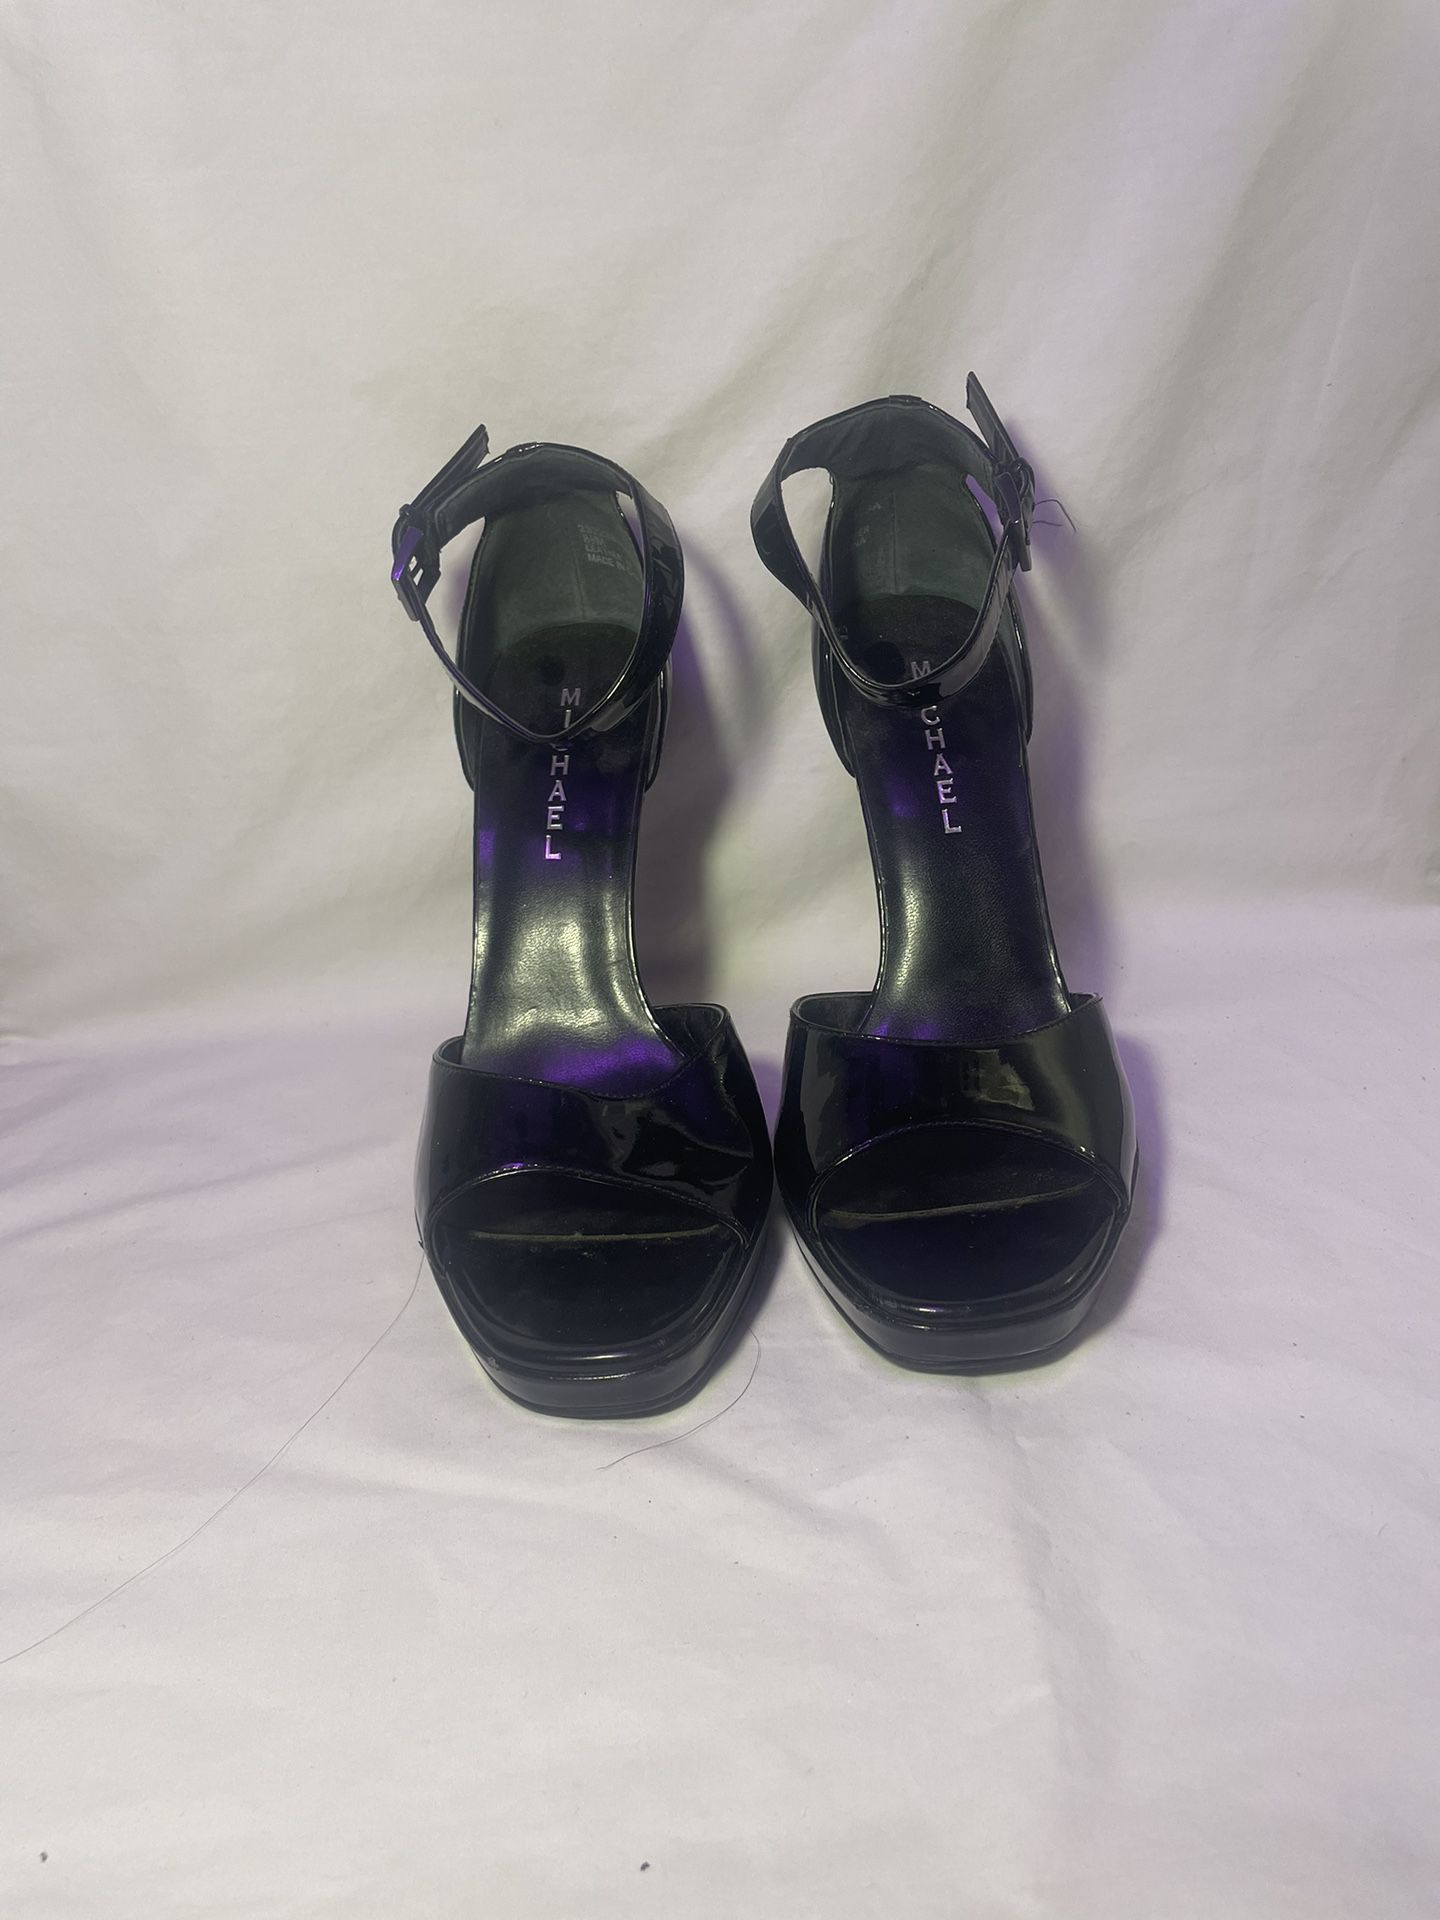 Michael Shannon Christy High Heels Pumps Peep Toe Women's Size 9 Black Leather